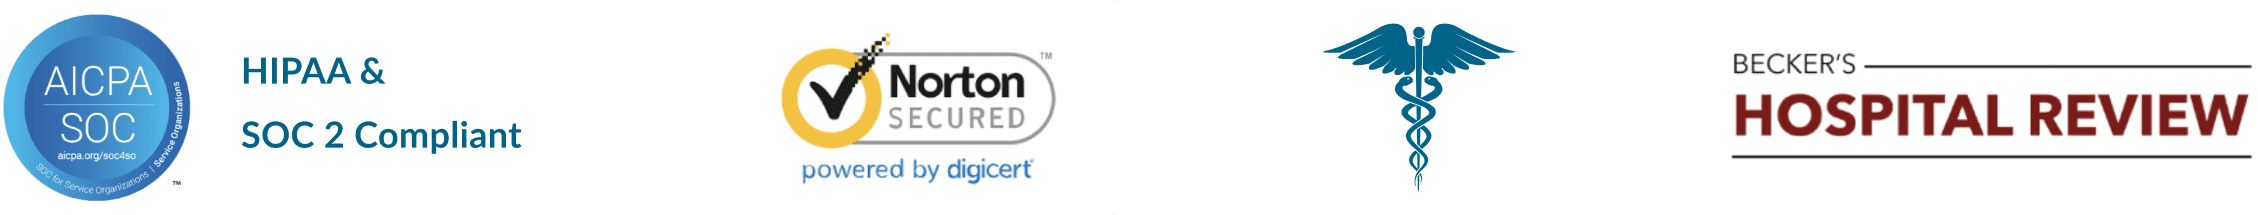 HIPAA and SOC 2 Compliant Logo, RX Logo, Norton Secured Logo, Becker’s Hospital Review Logo